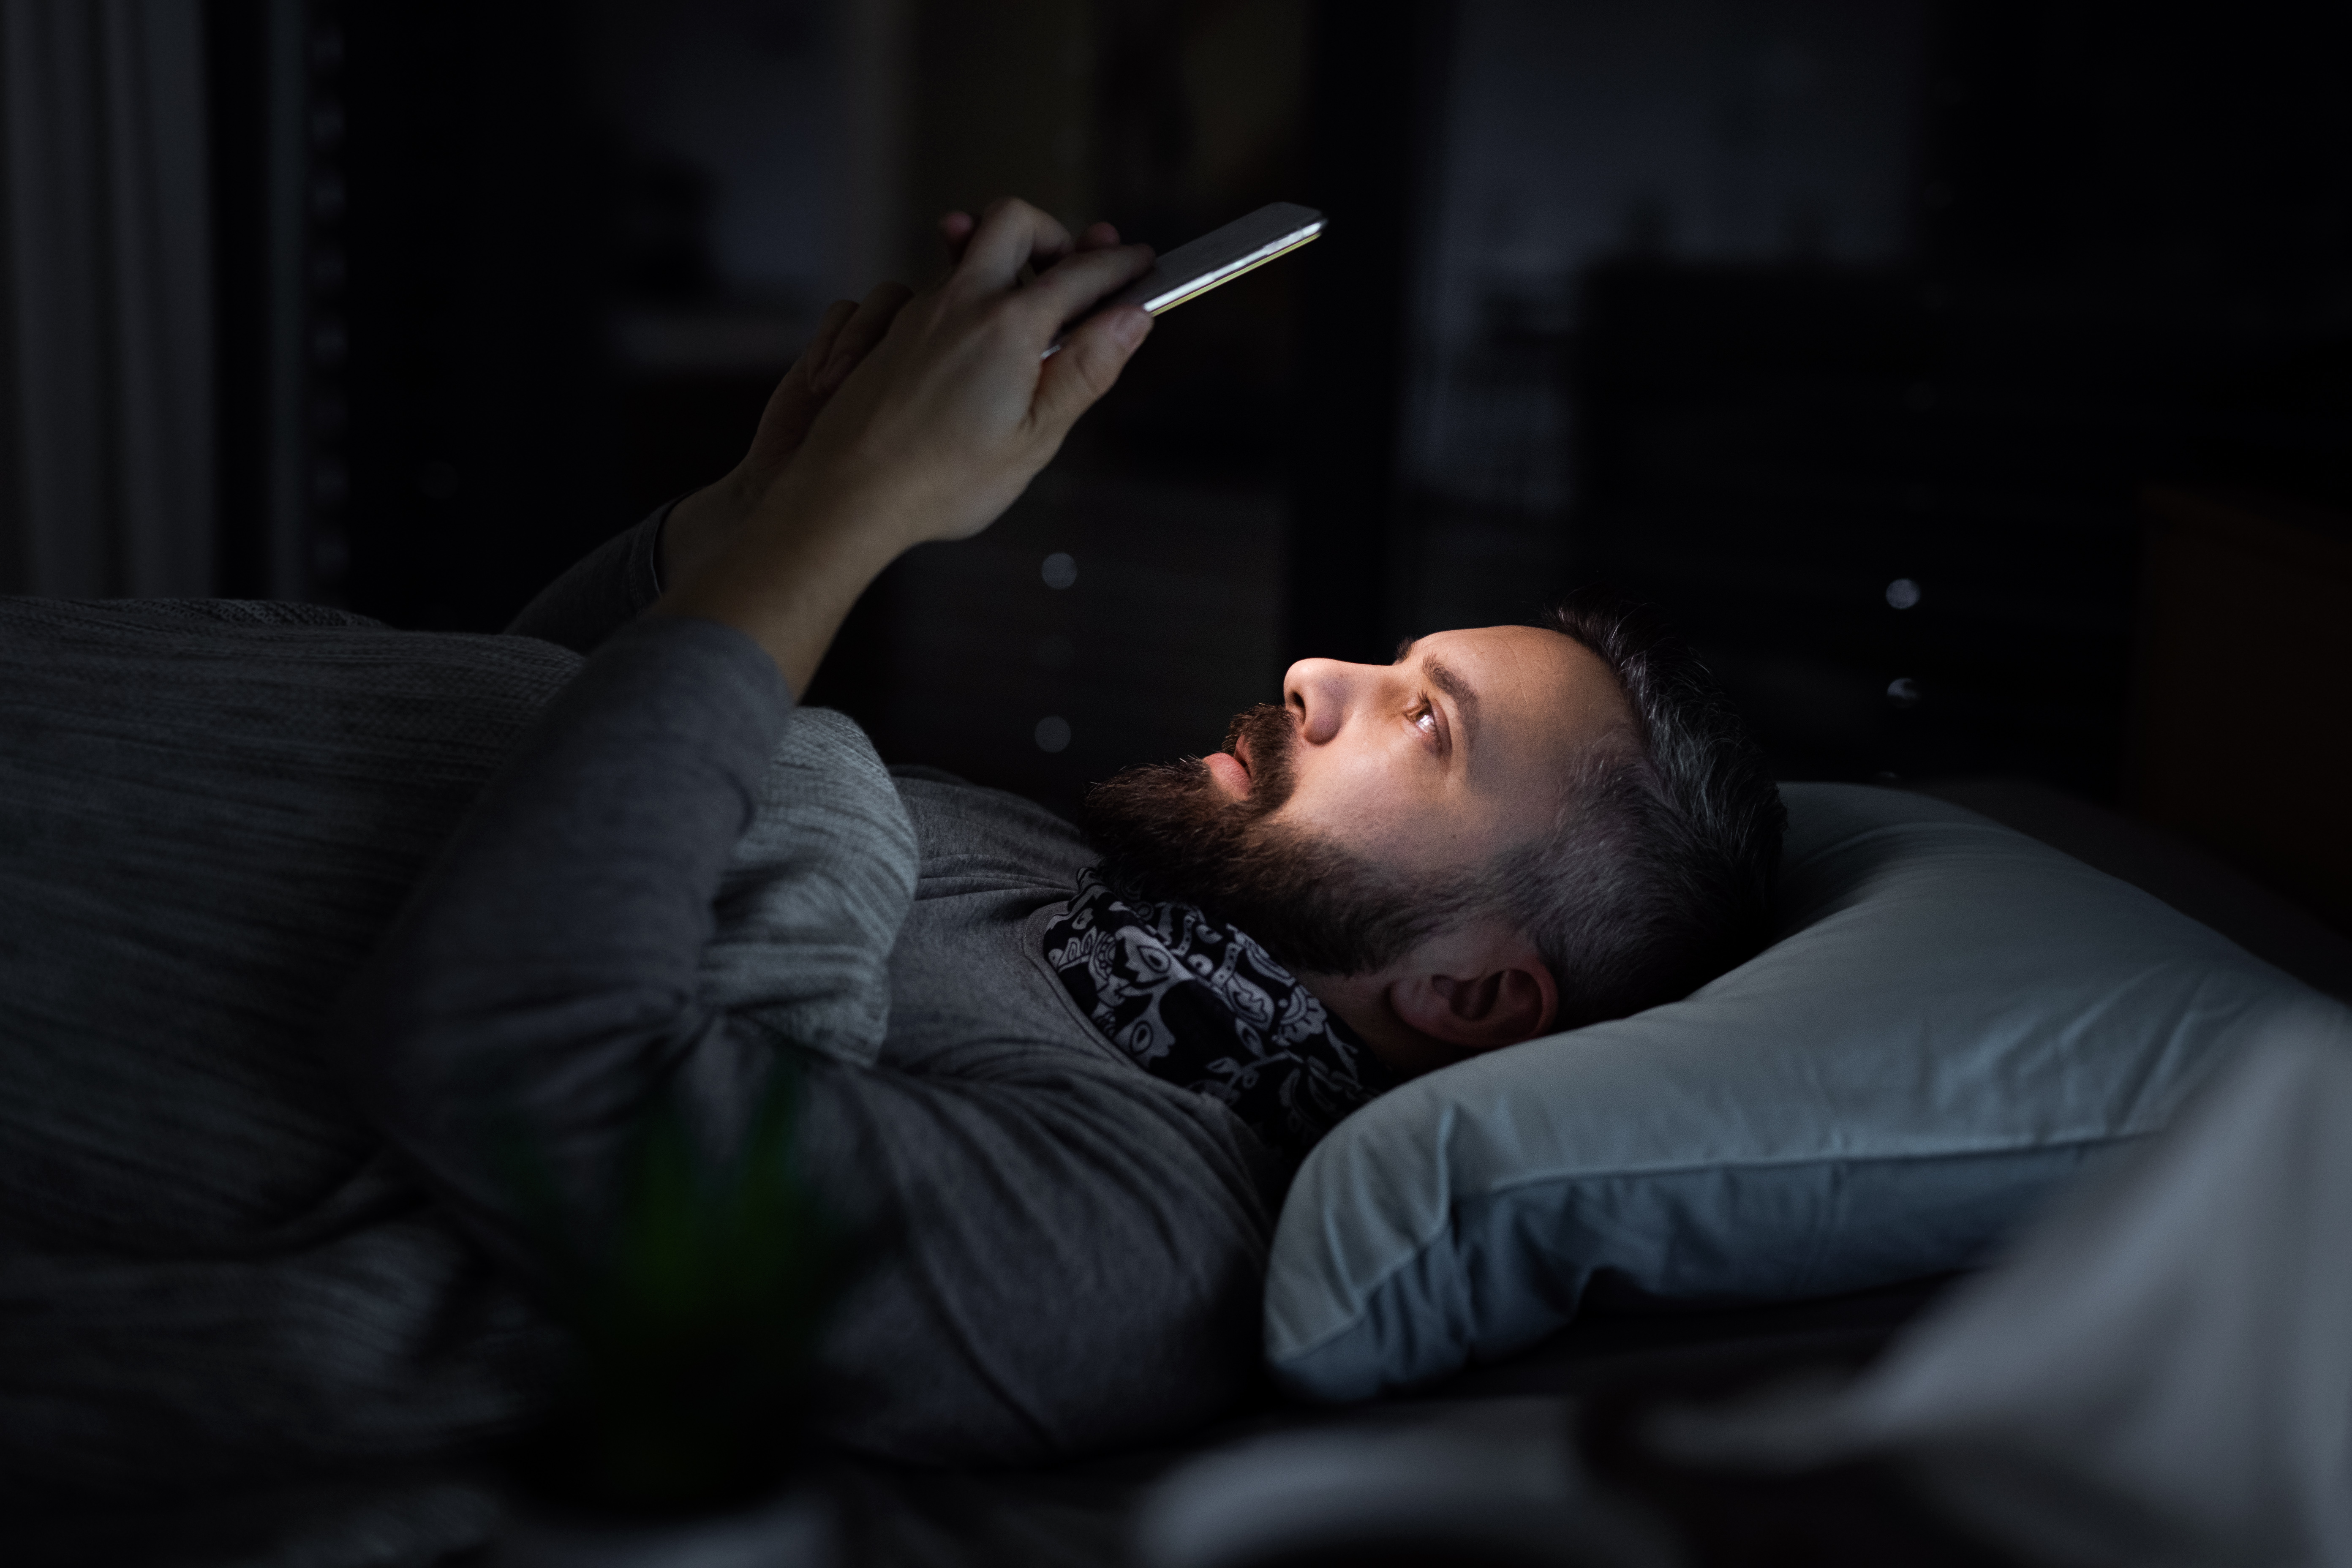 Is dark mode good for sleep?